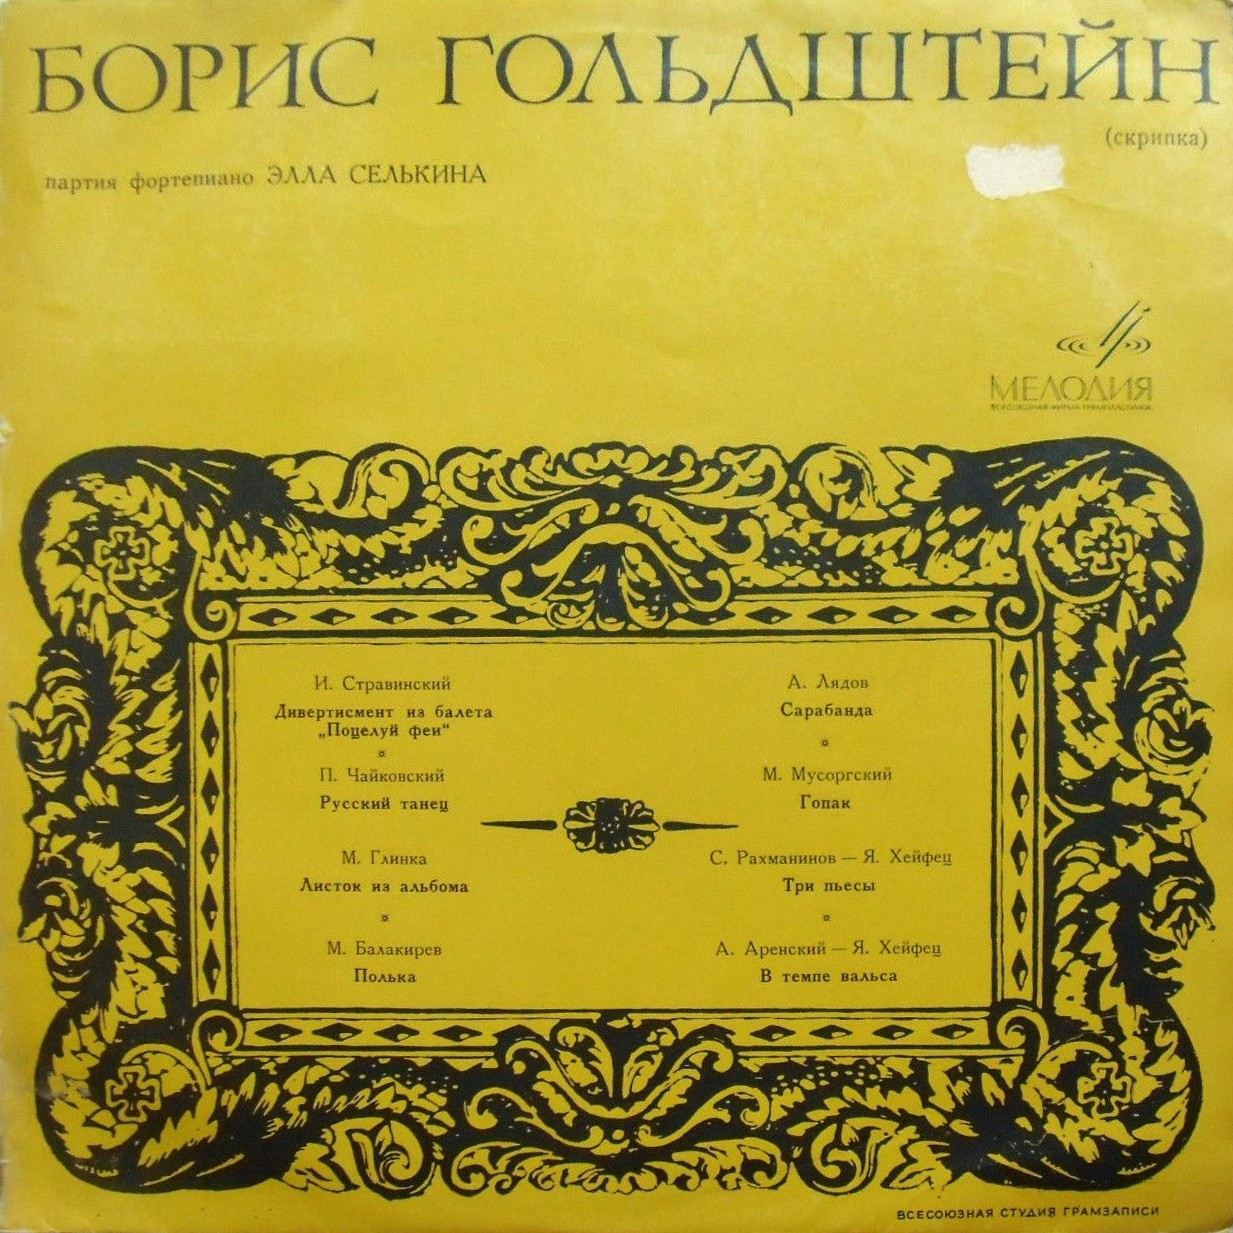 Борис Гольдштейн, скрипка